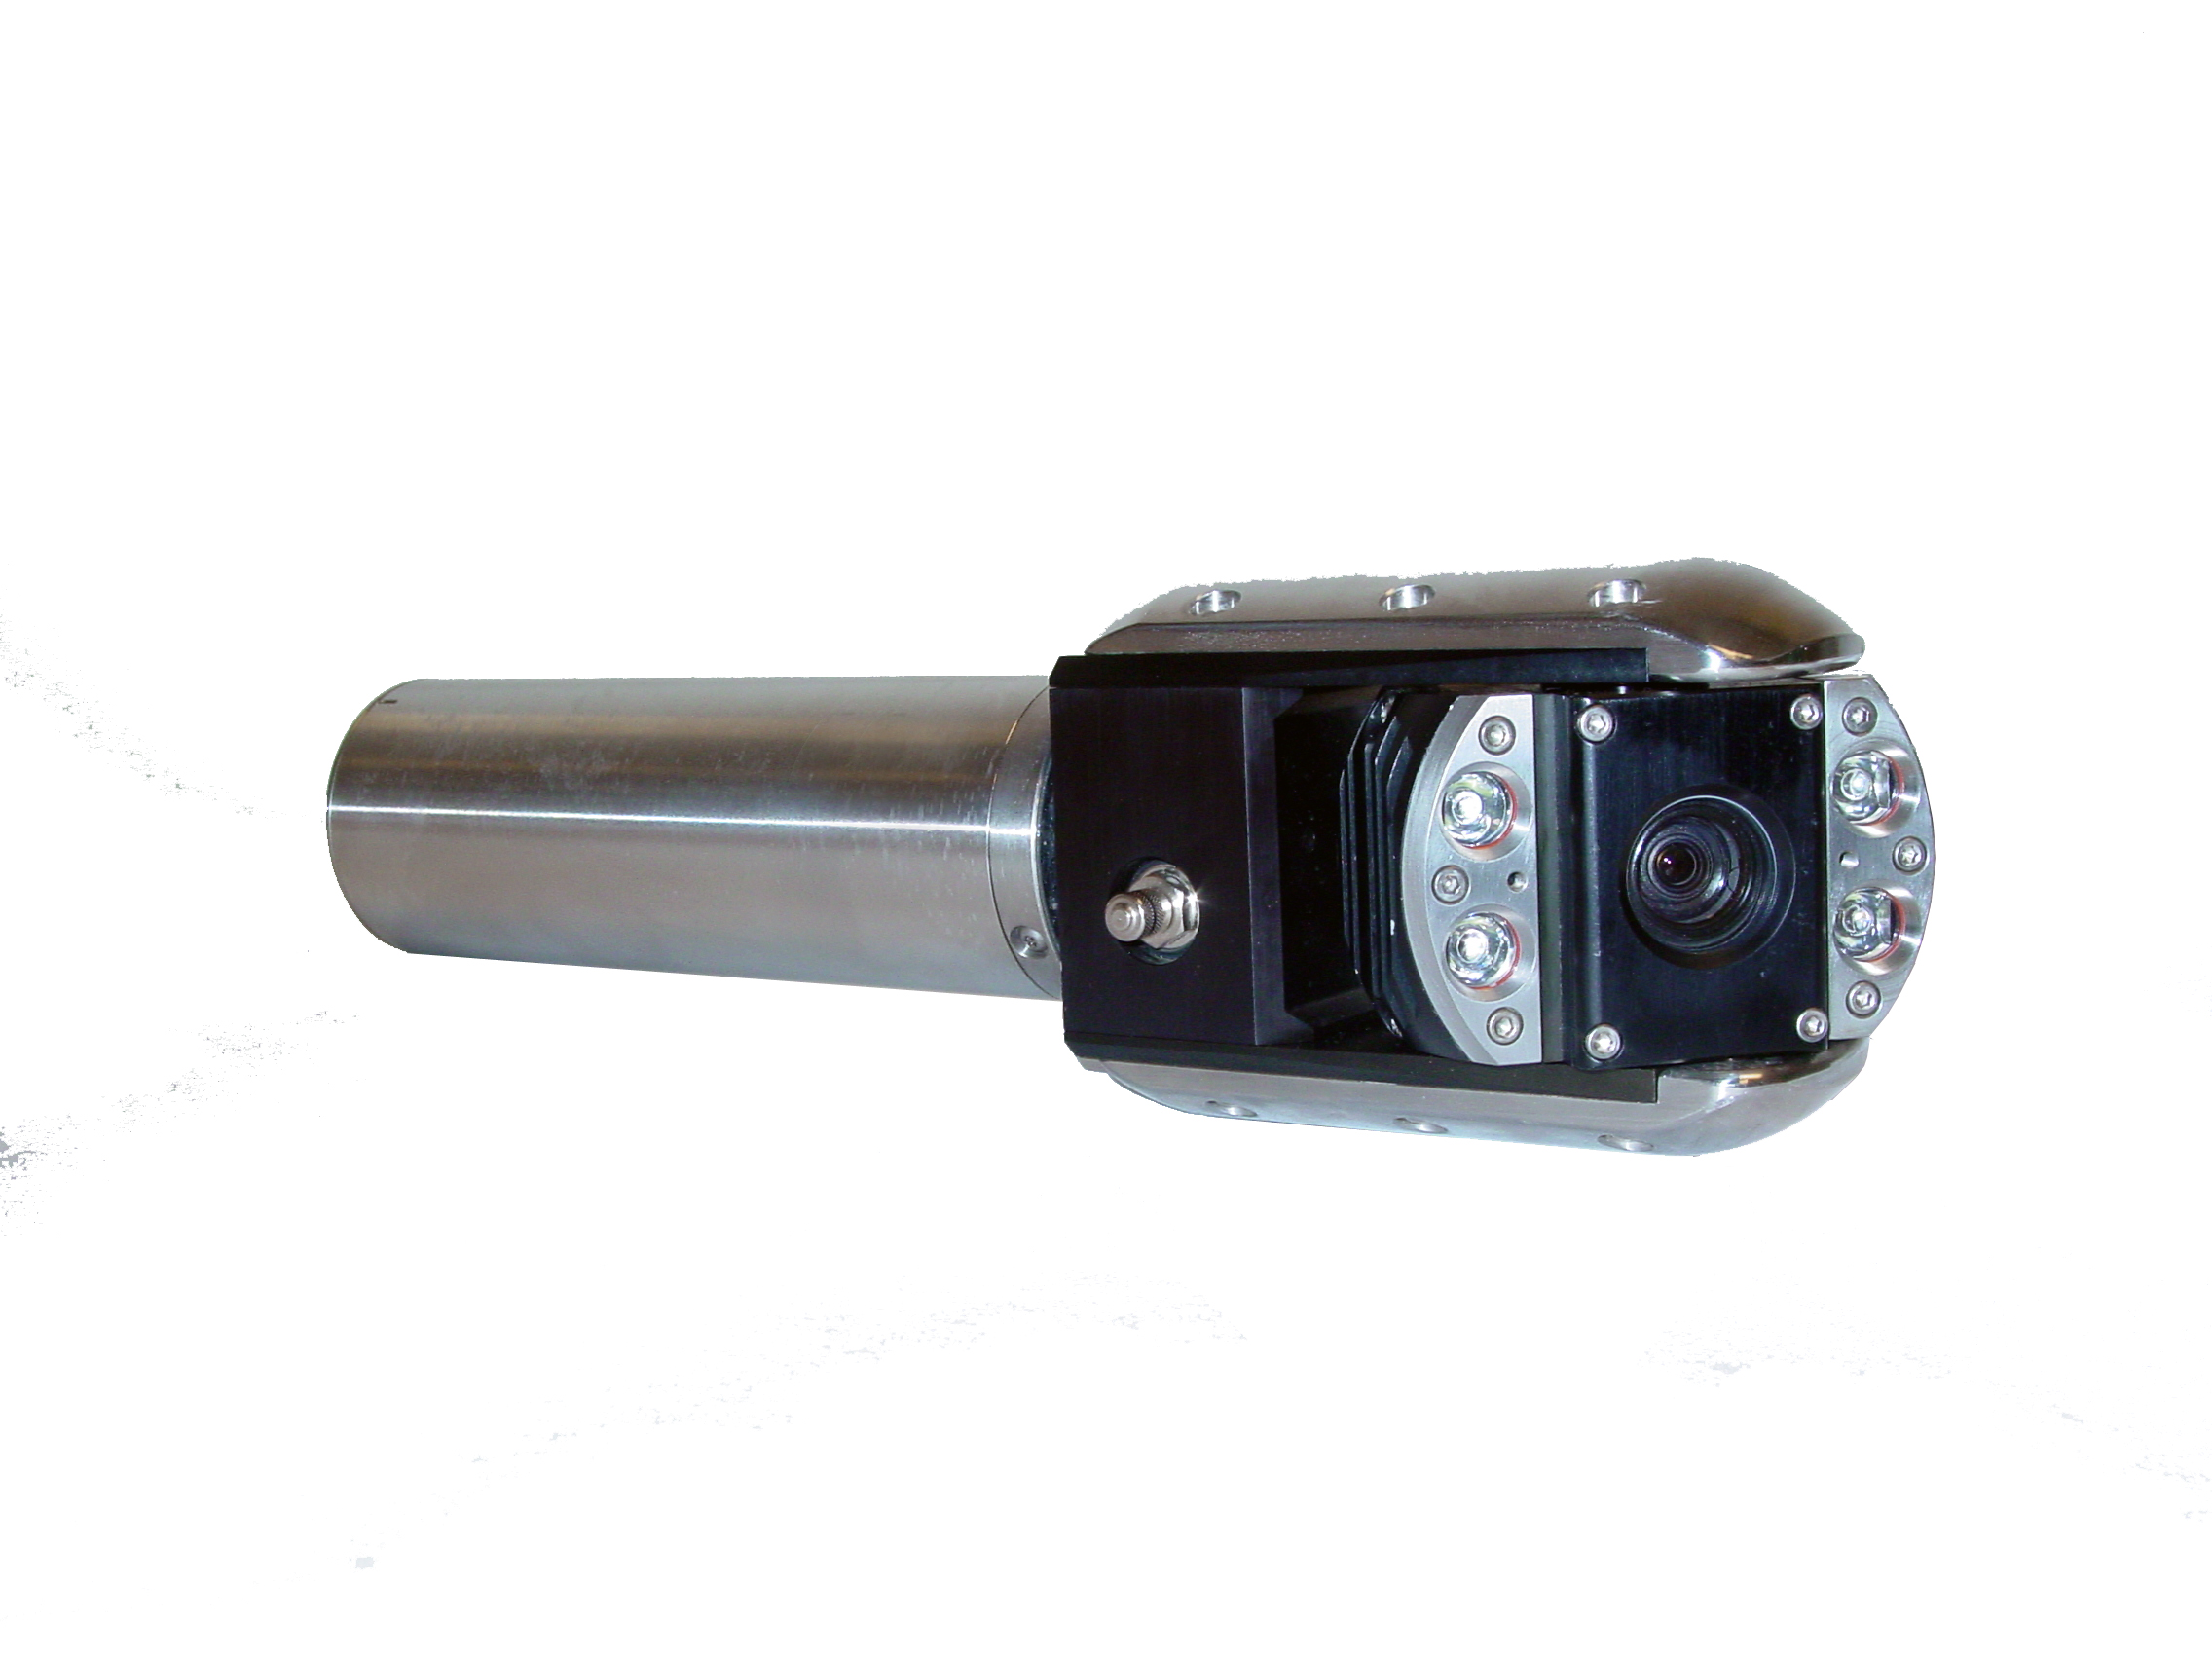 OZIII Pan Tilt & Optical Zoom Camera